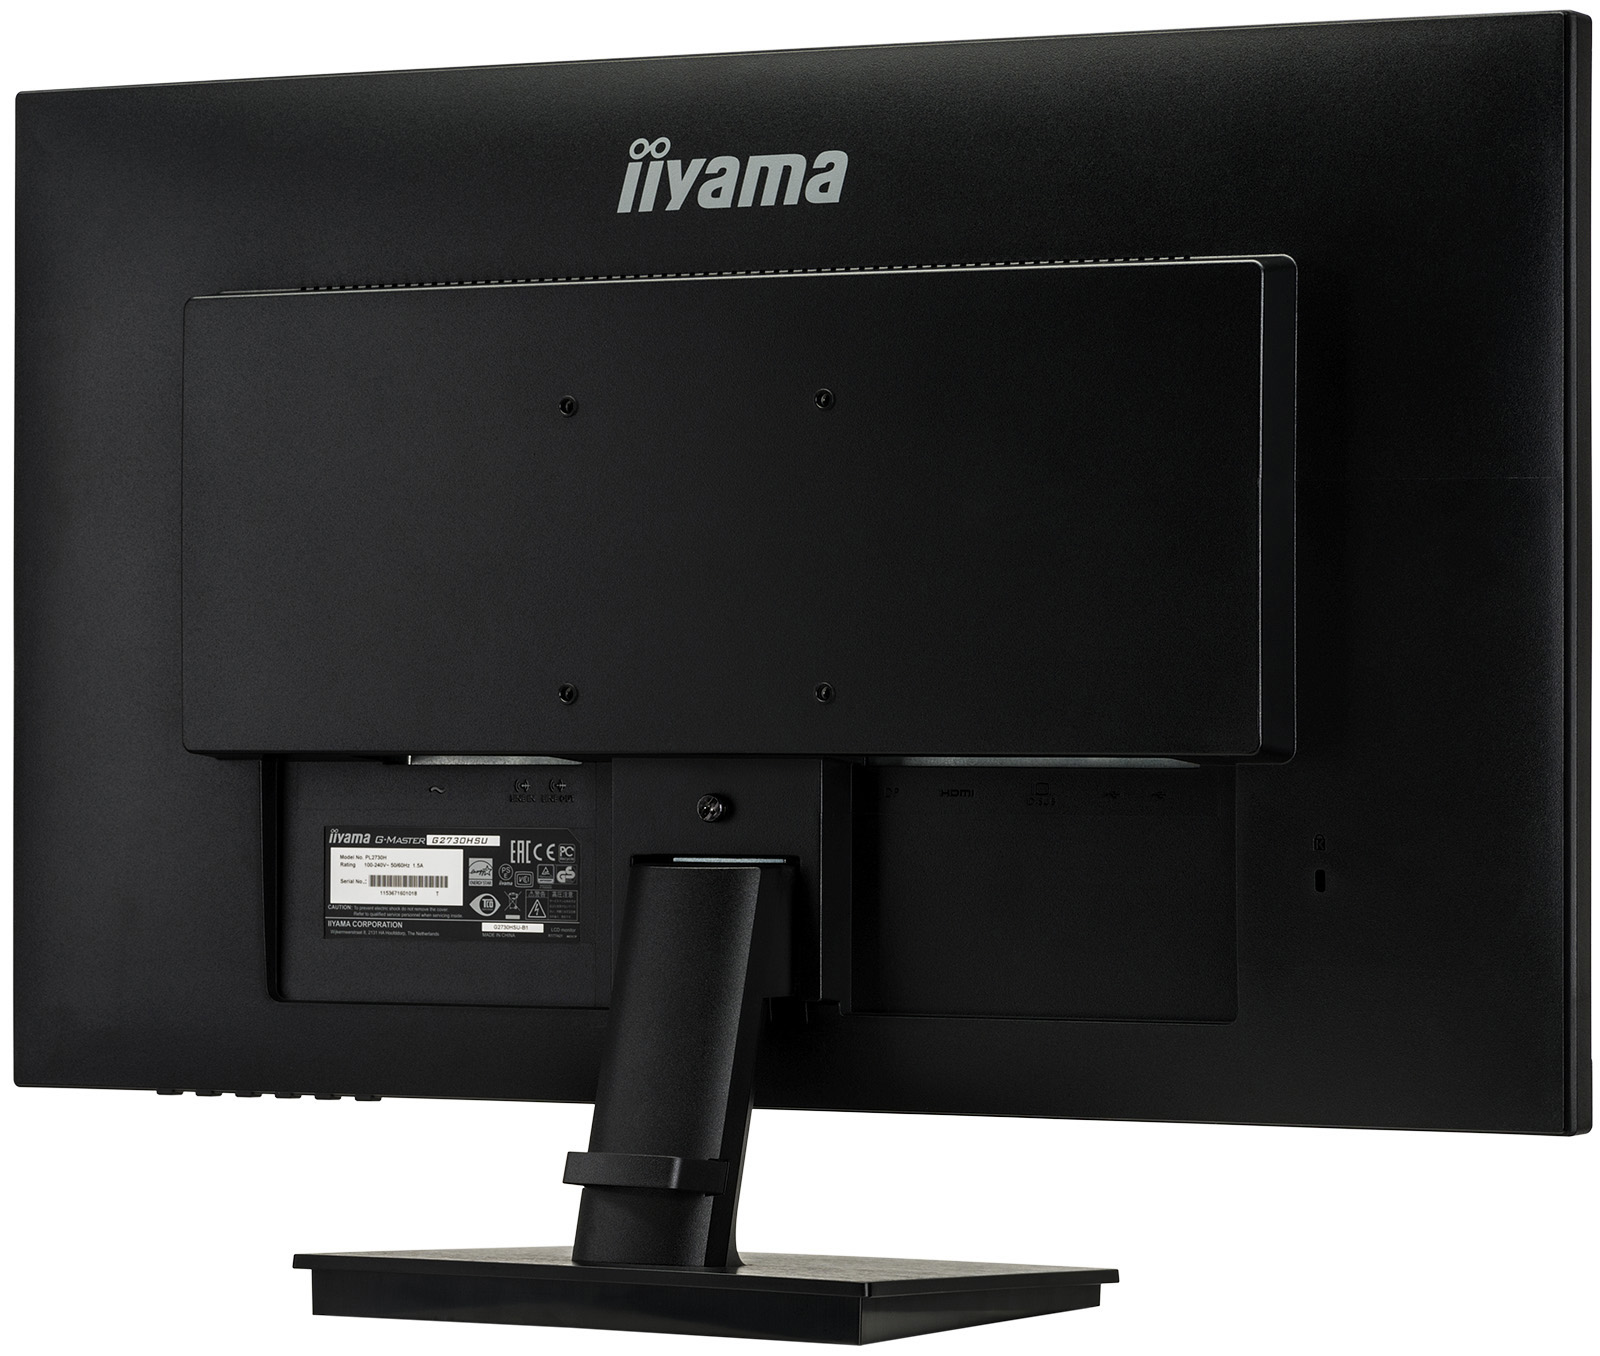 IIYAMA G-MASTER G2730HSU-B1 27 Hz) ms Gaming (1 Monitor Full-HD Reaktionszeit, Zoll 75